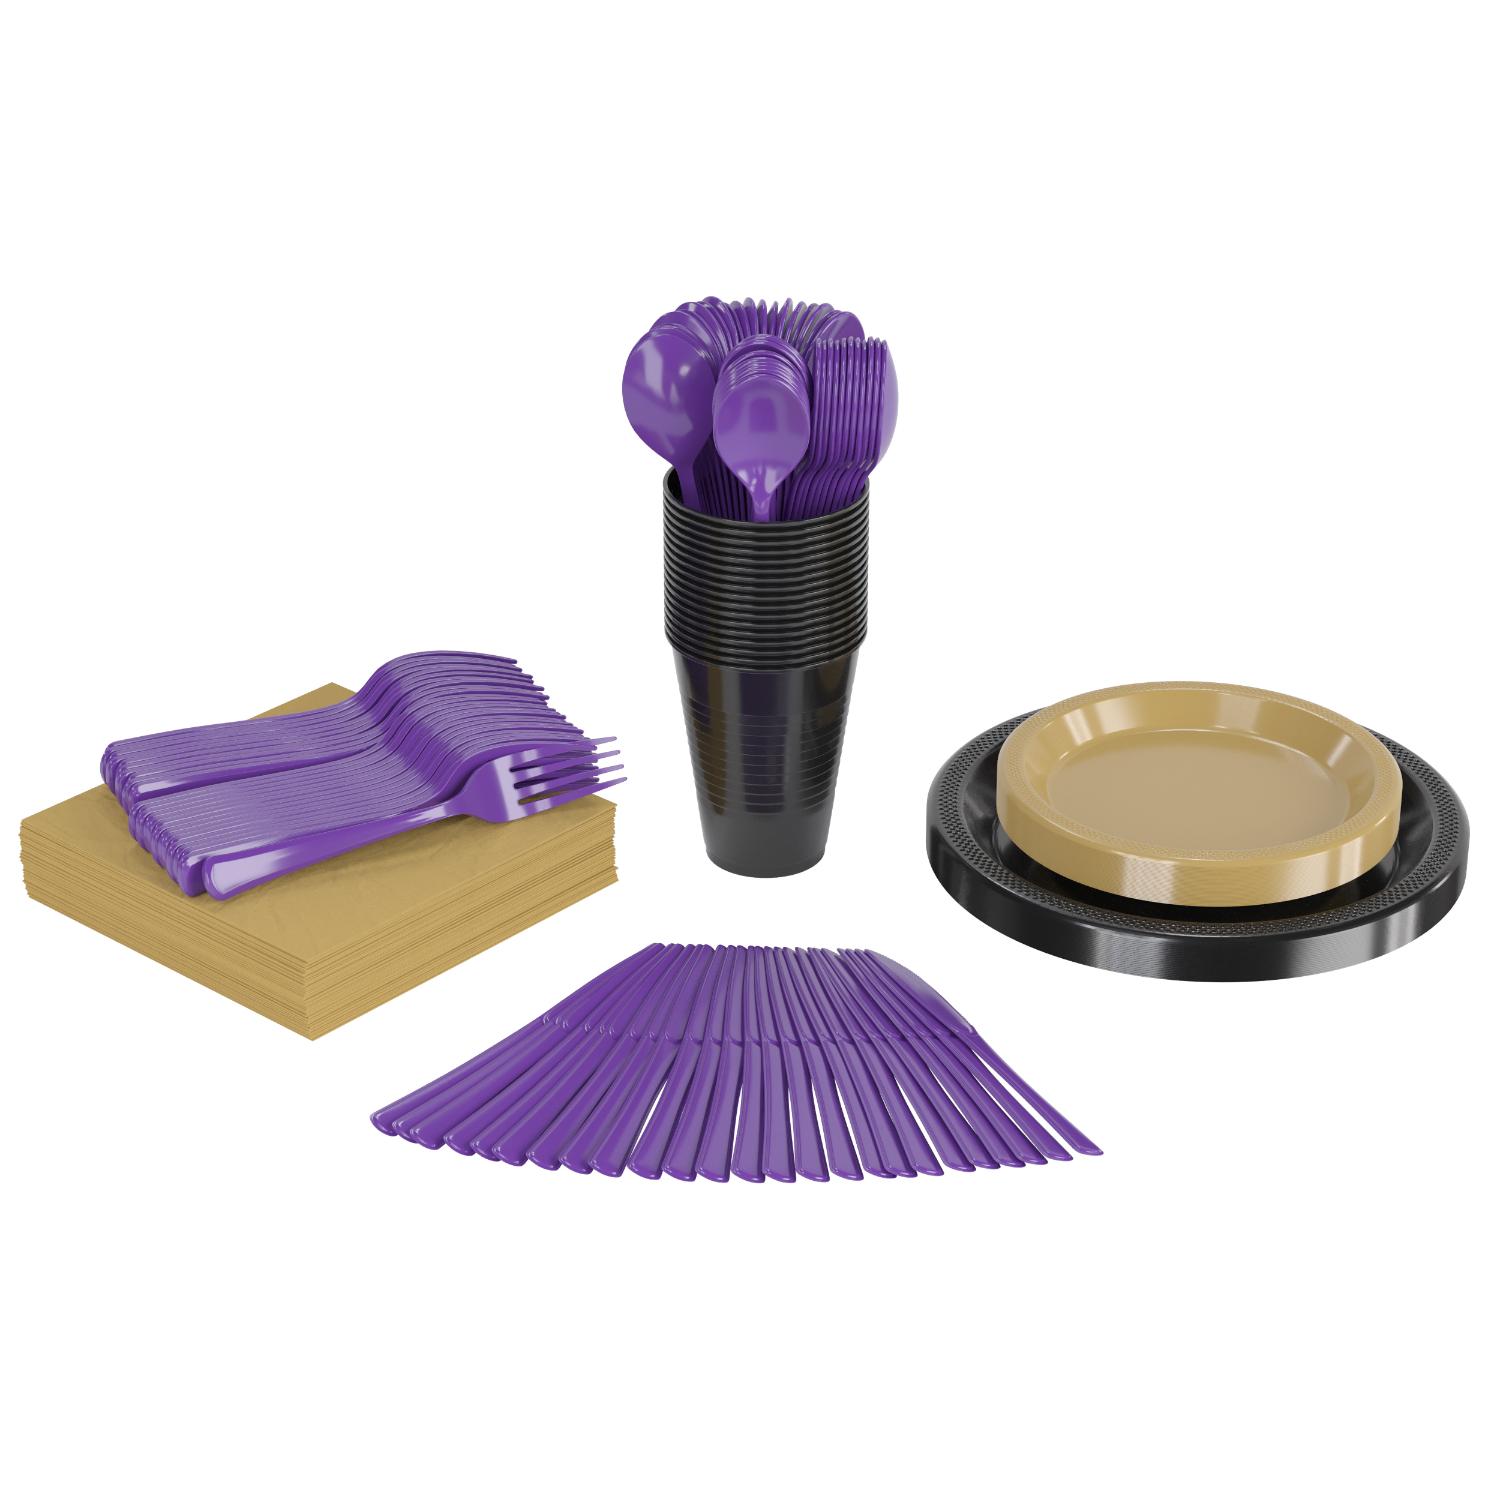 350 Pcs Black/Purple/Gold Disposable Tableware Set